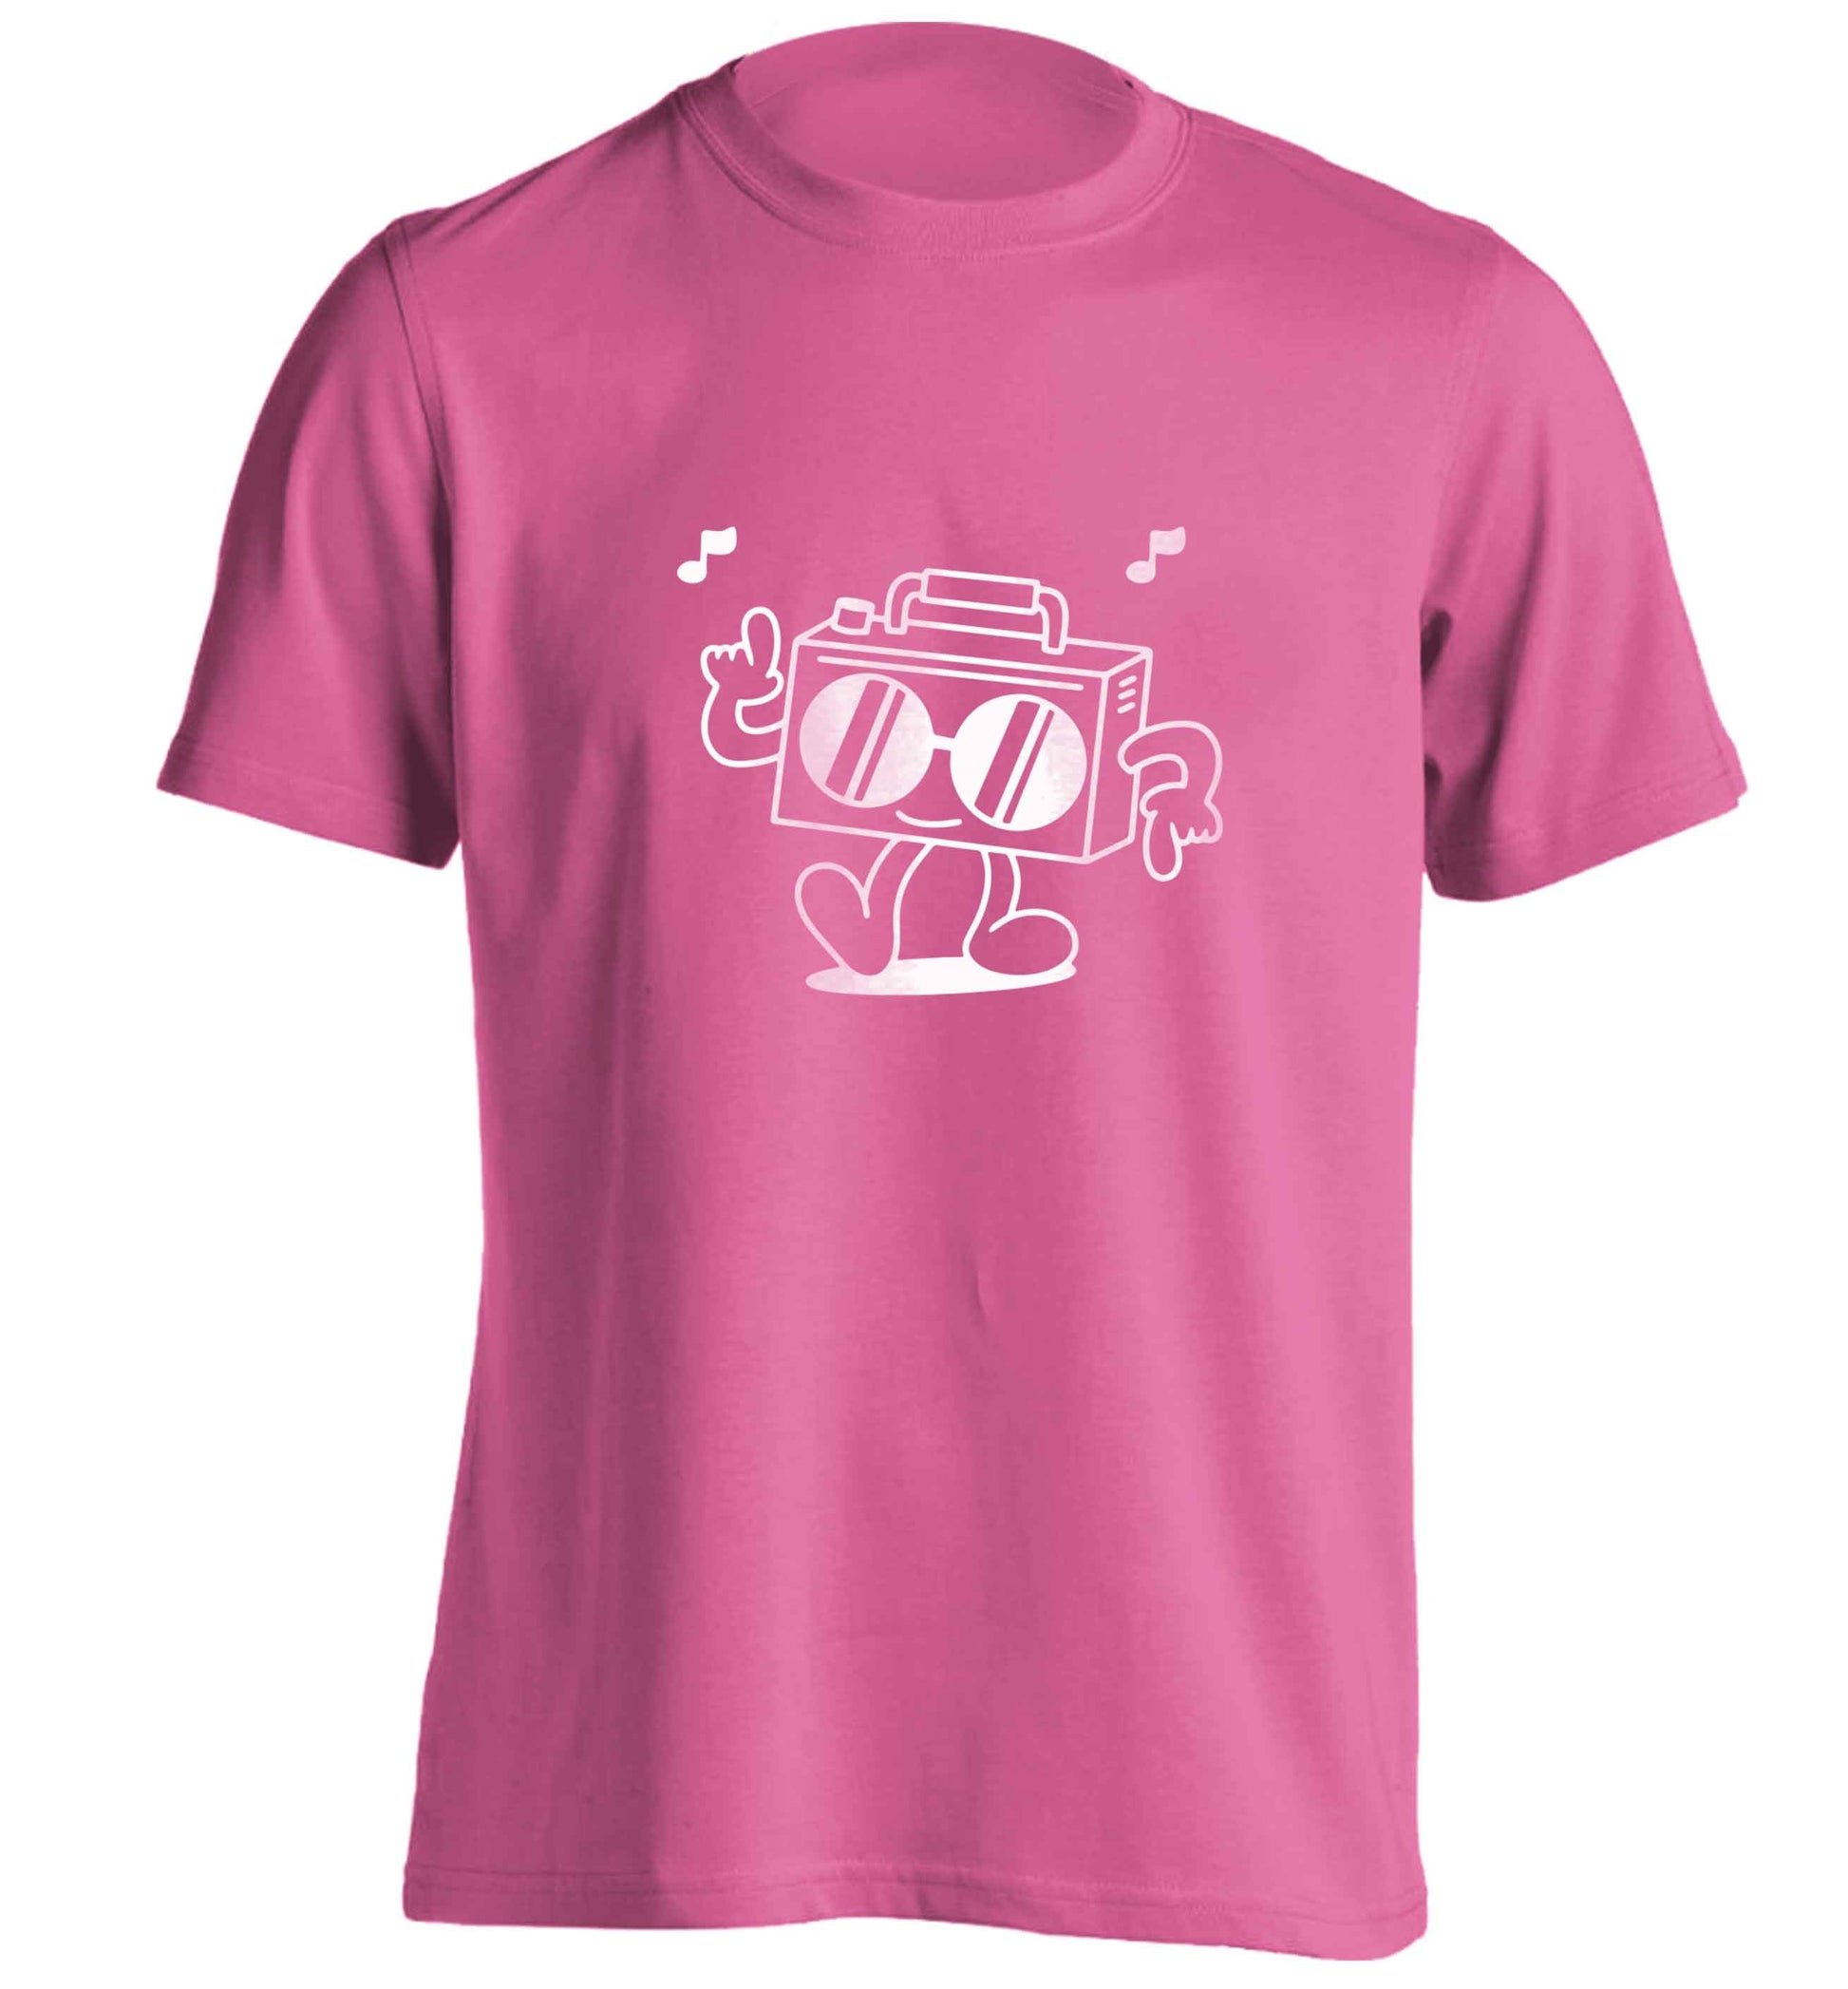 Boombox adults unisex pink Tshirt 2XL